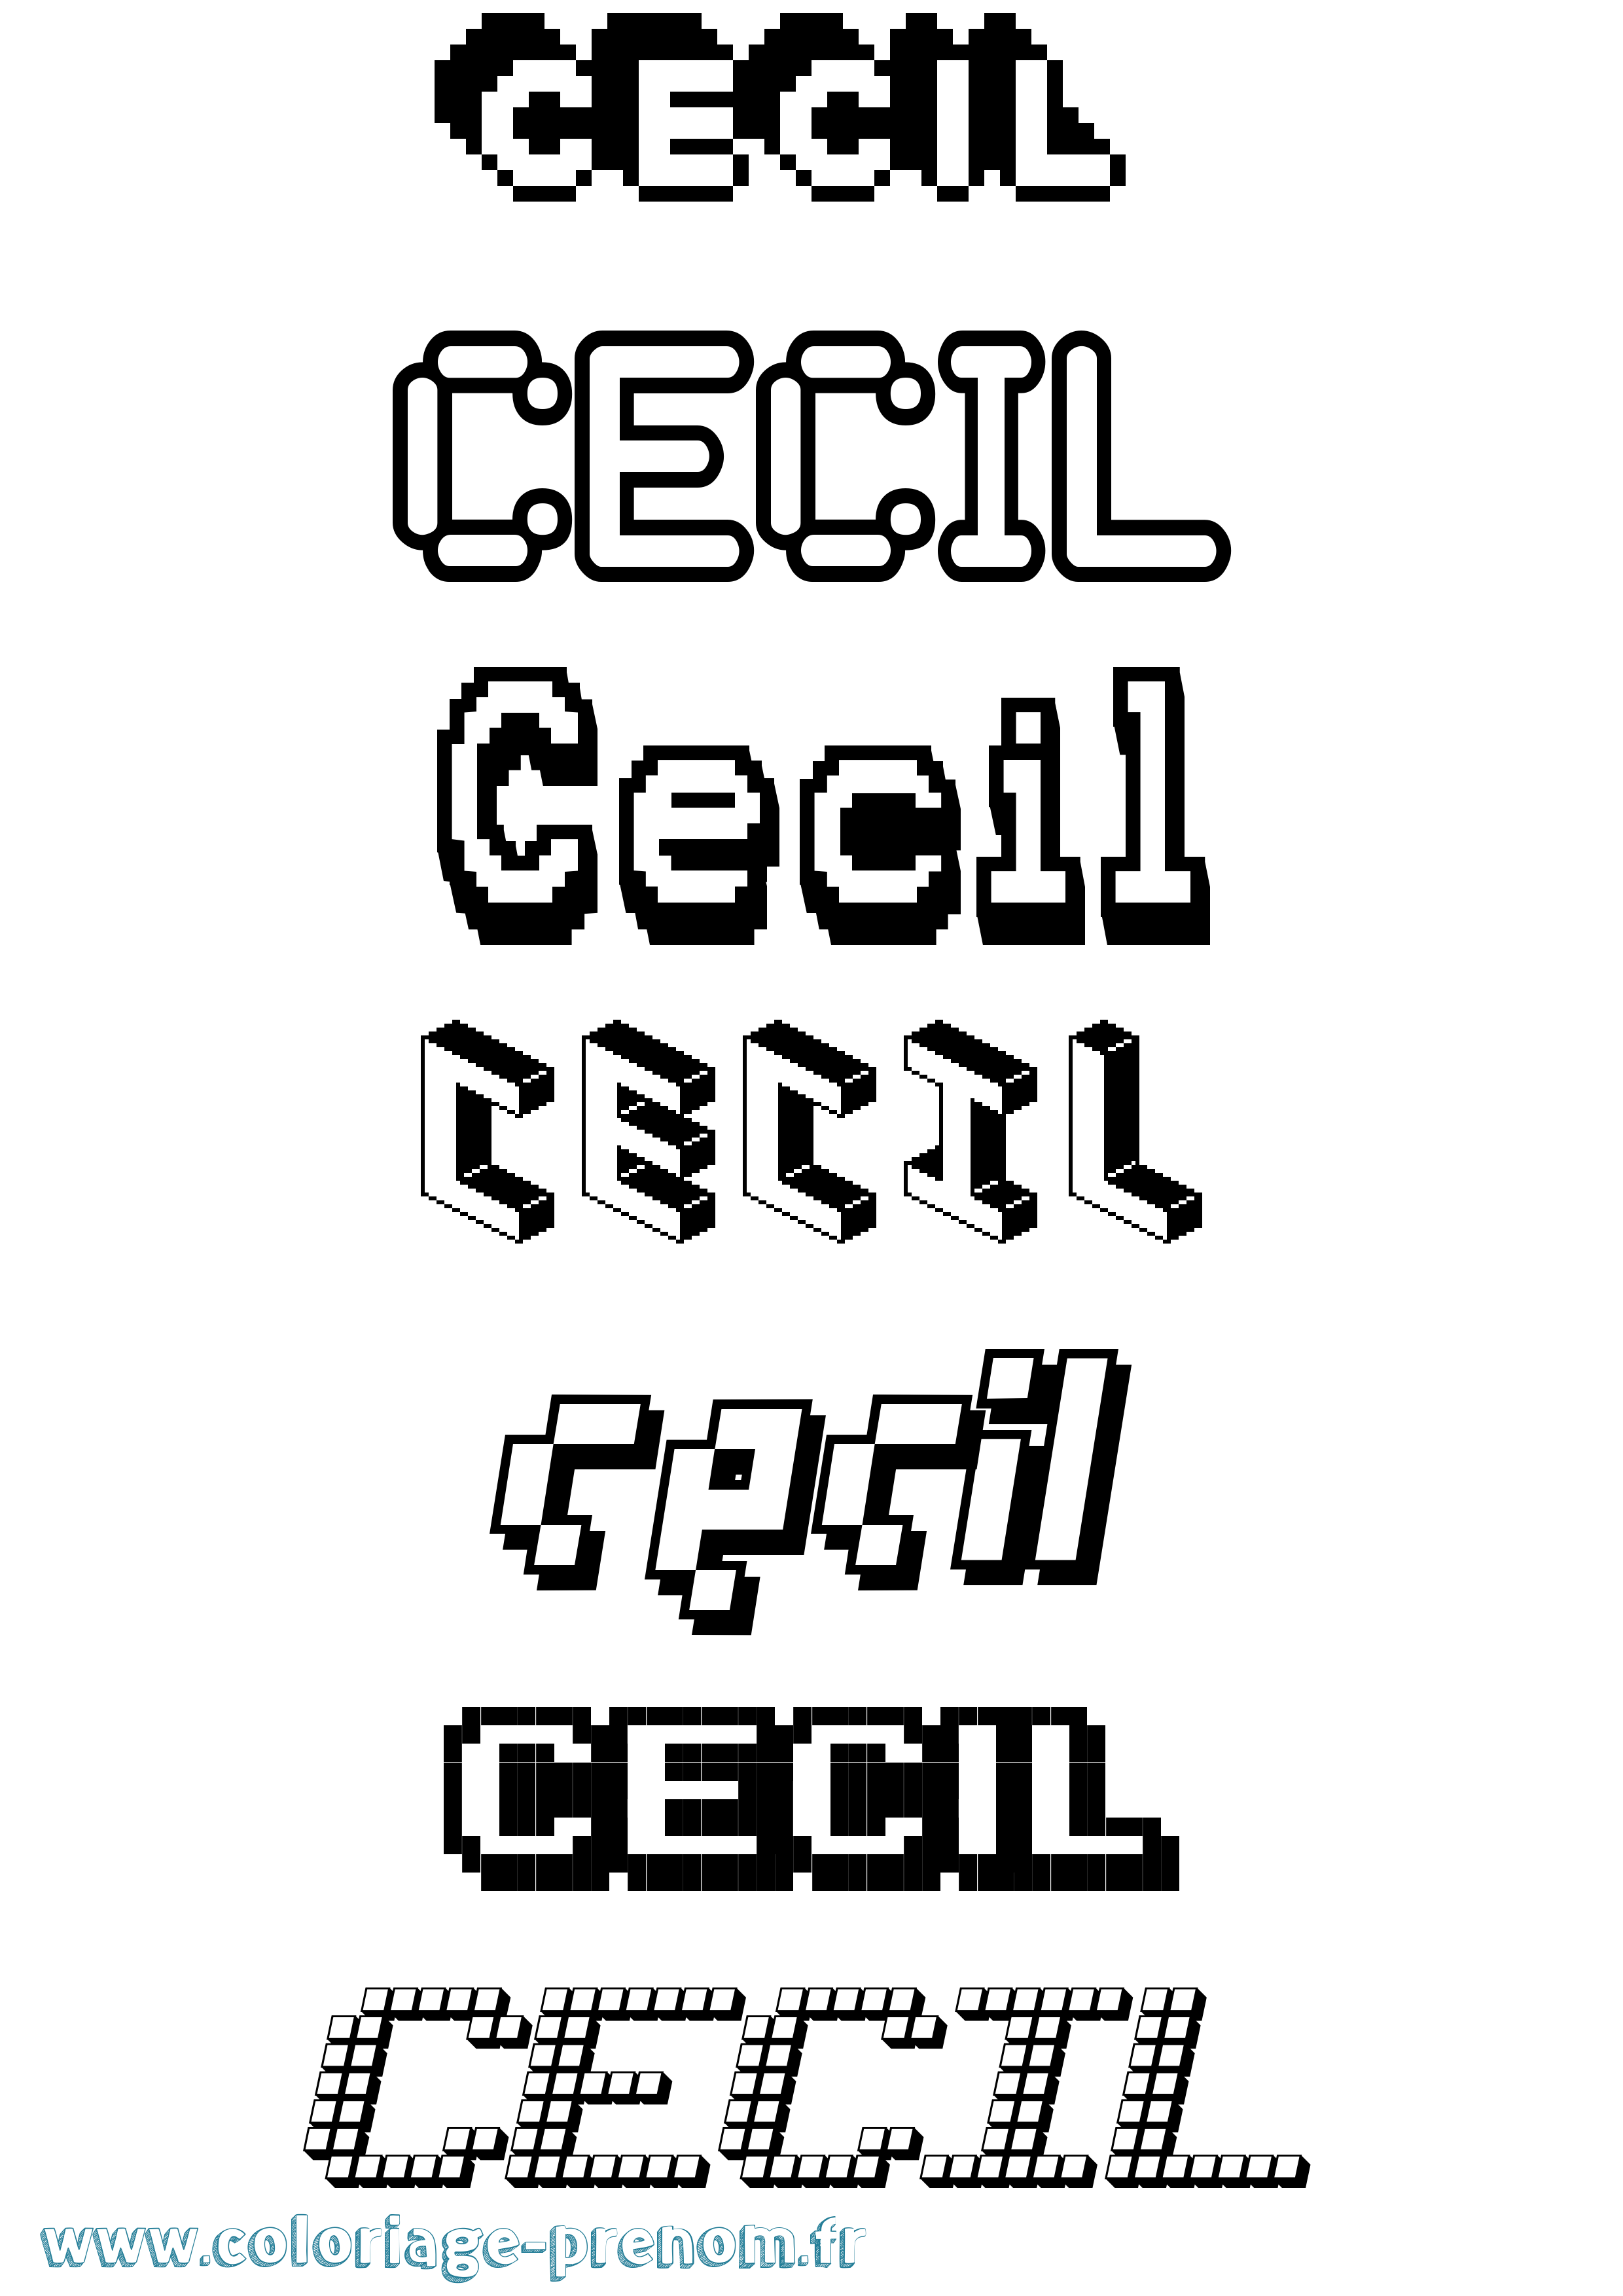 Coloriage prénom Cecil Pixel